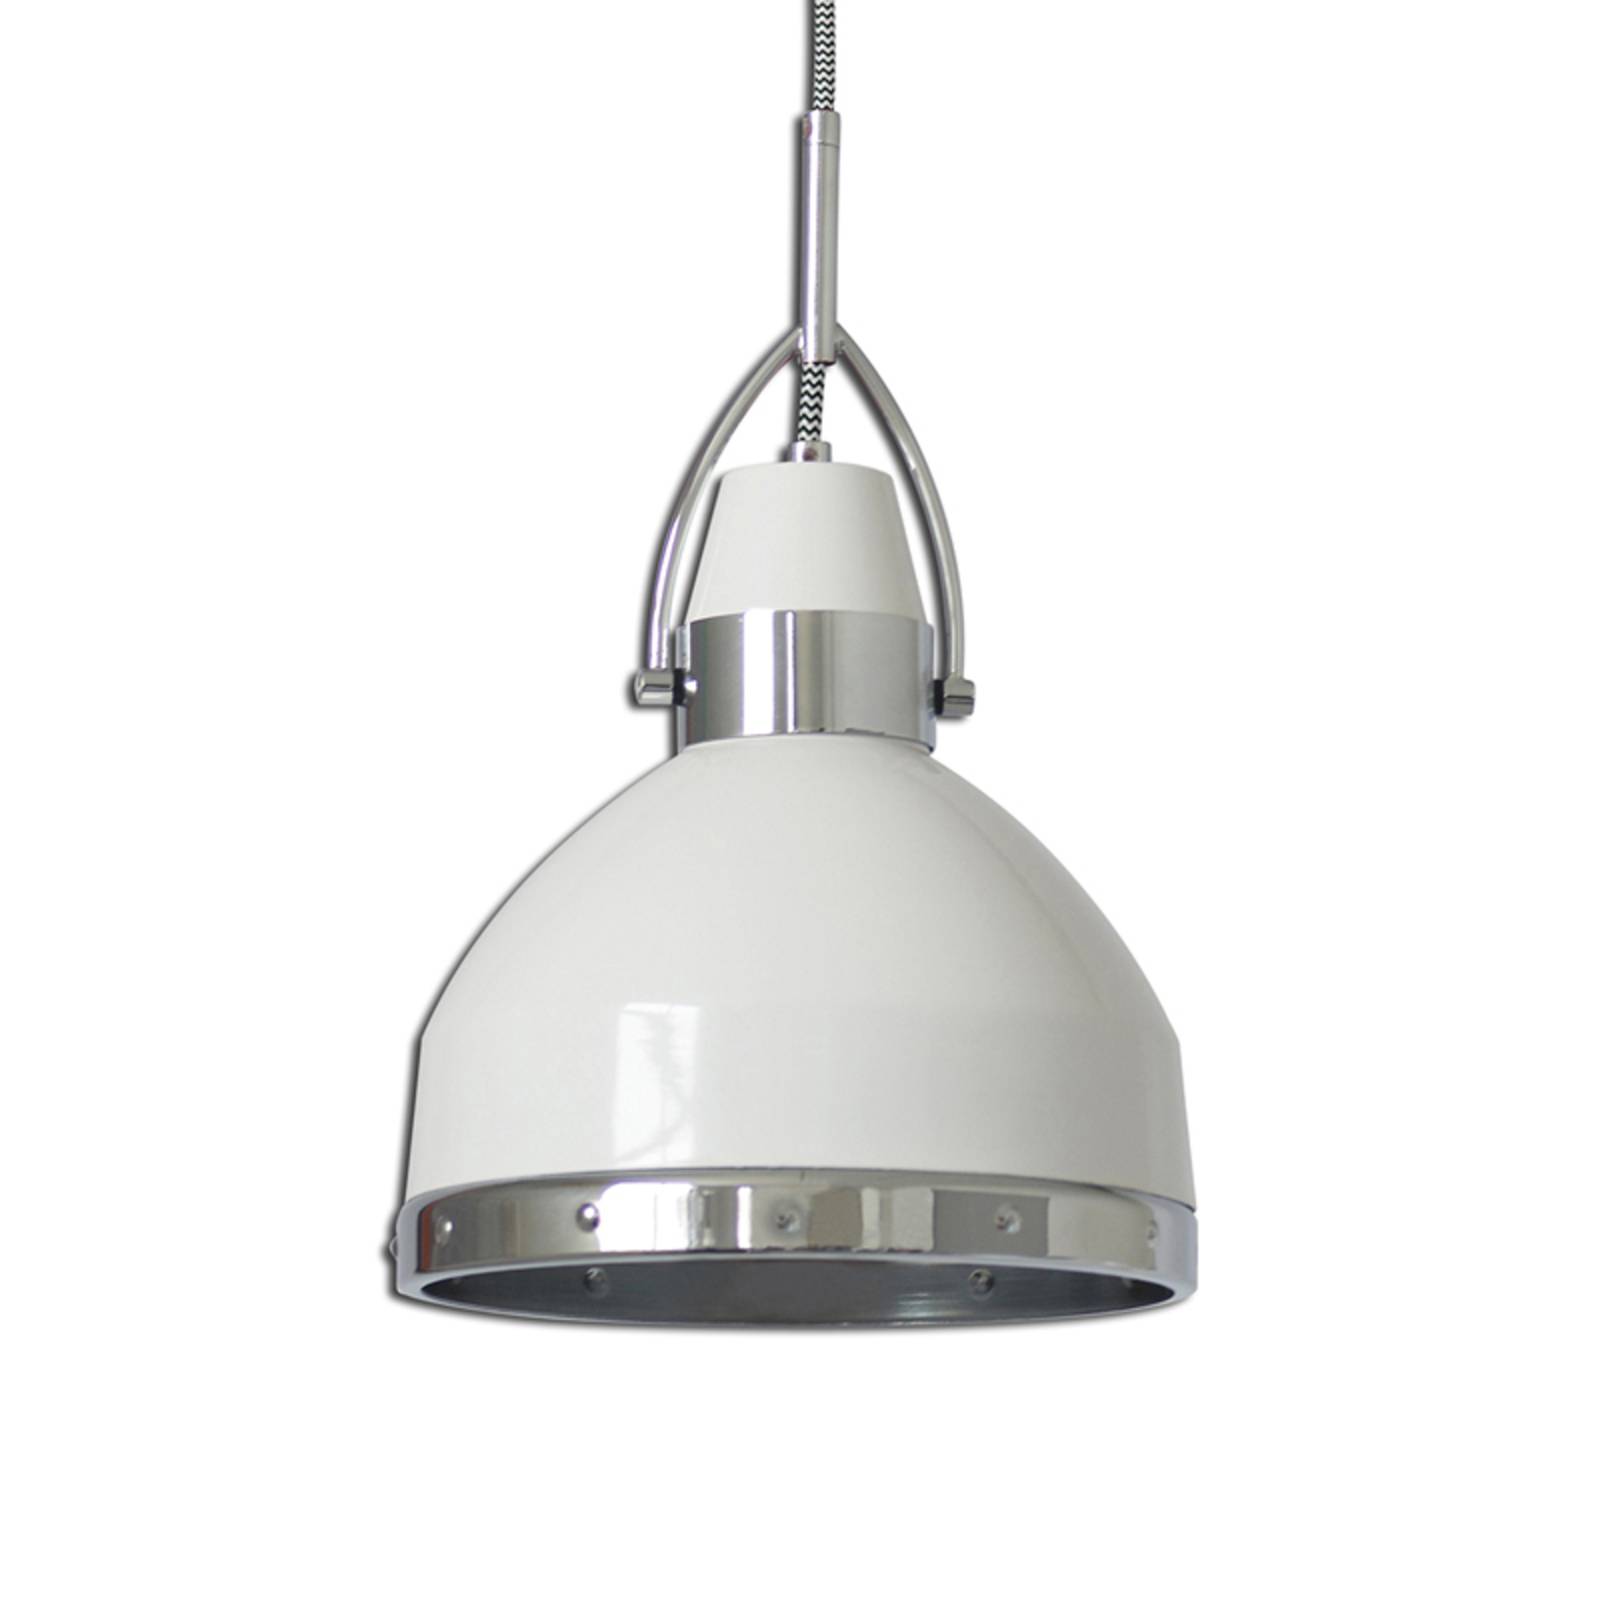 Witte hanglamp Britta in industrial design